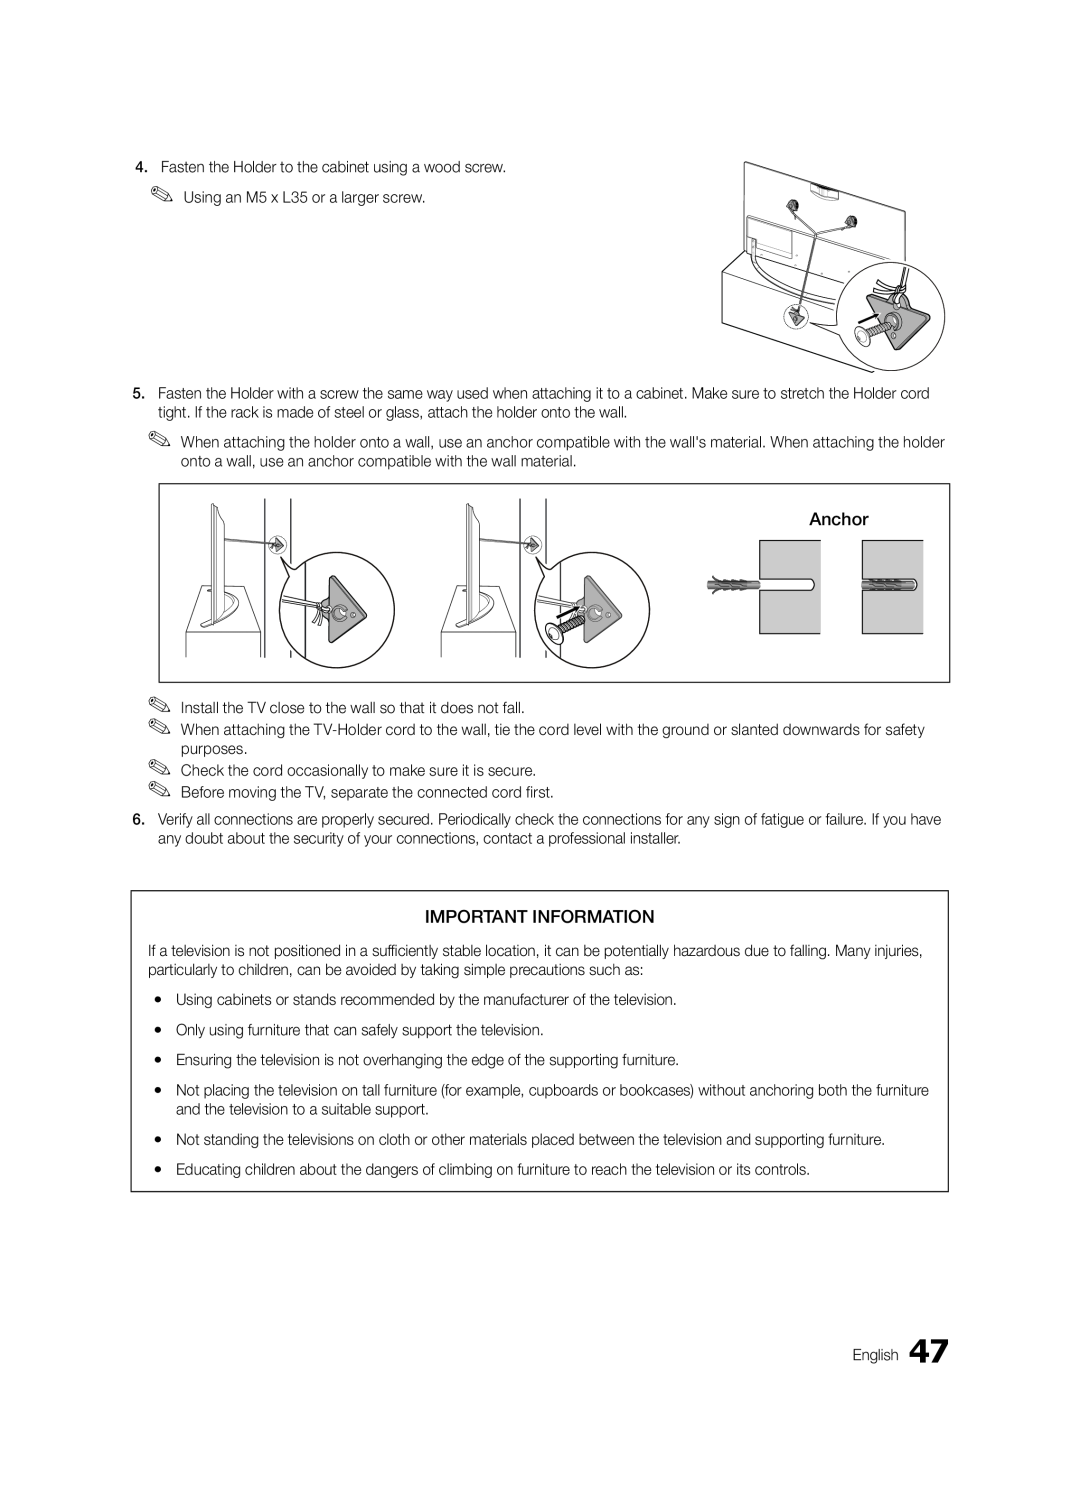 Samsung HG46NB890XFXZA, HG65NB890XFXZA installation manual Anchor, Important Information 